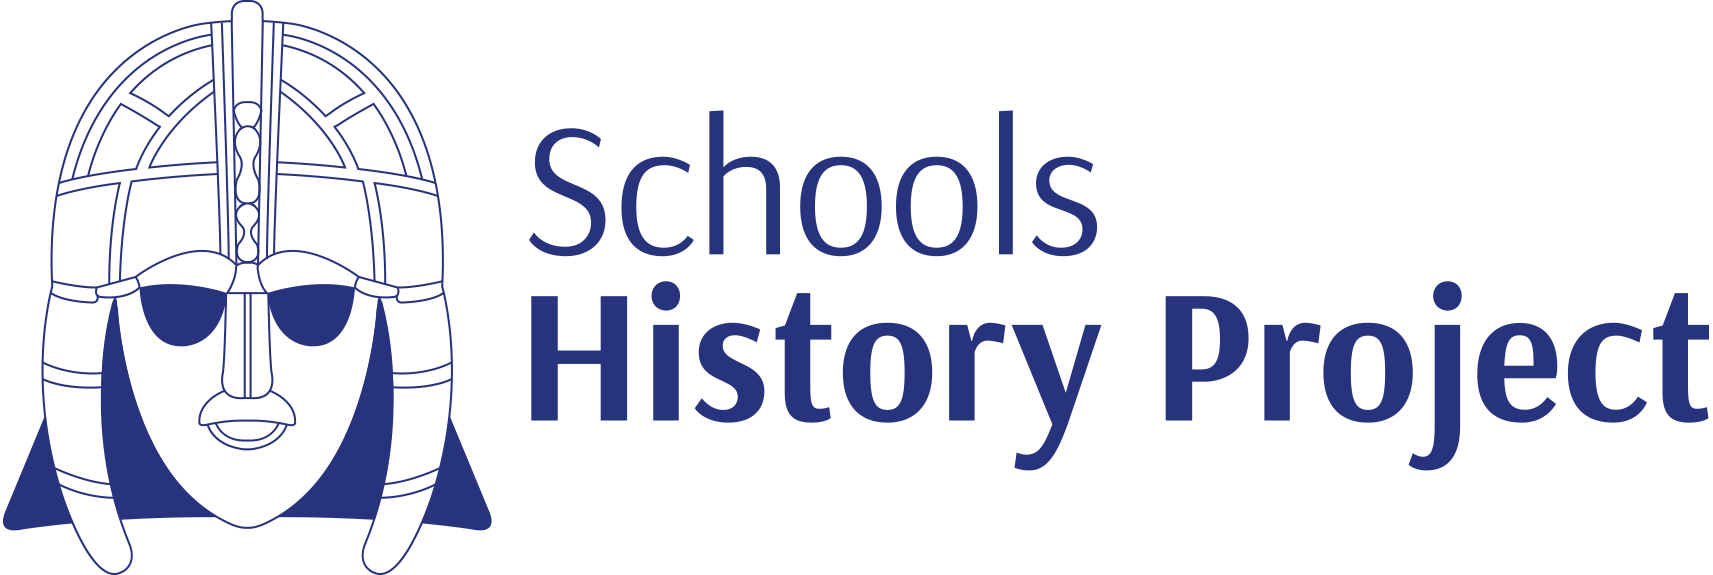 Schools History Project